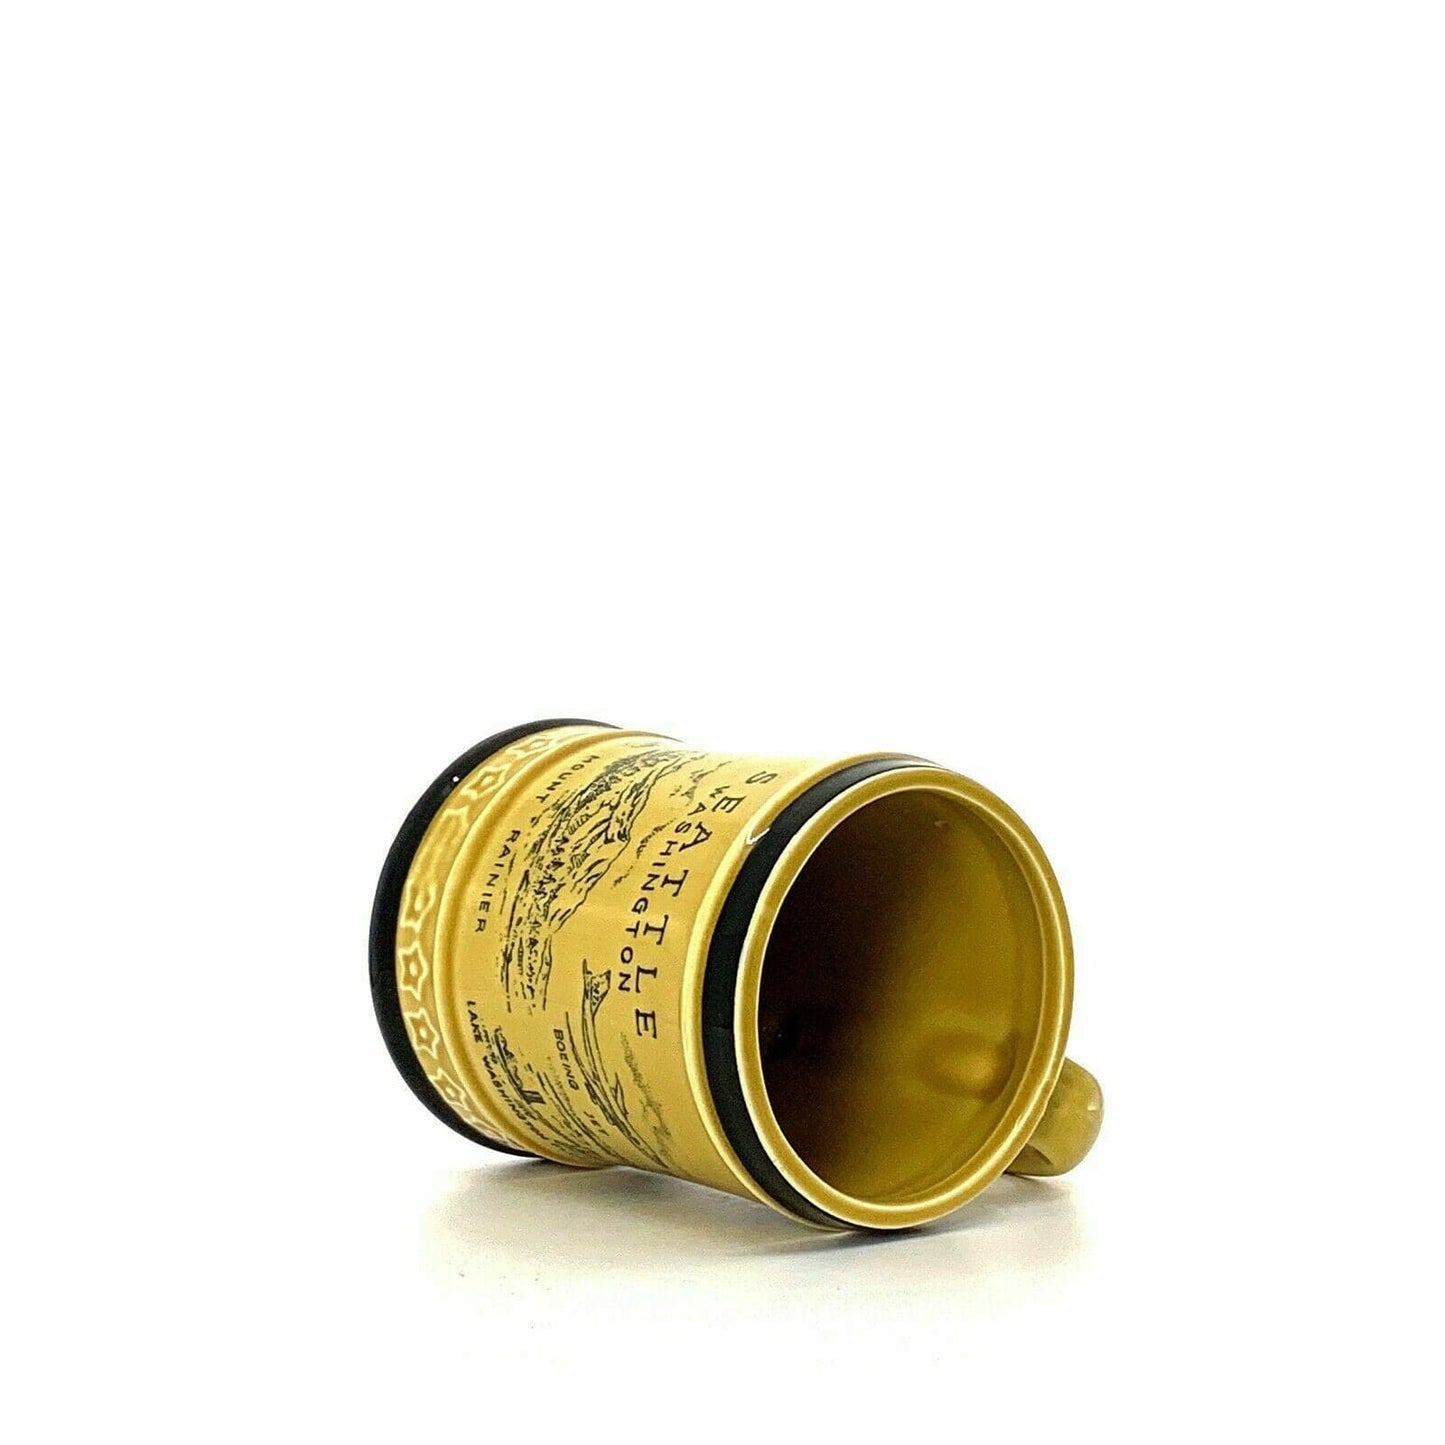 SEATTLE WASHINGTON Ceramic Souvenir Coffee Cup Mug, Yellow - 12 fl oz